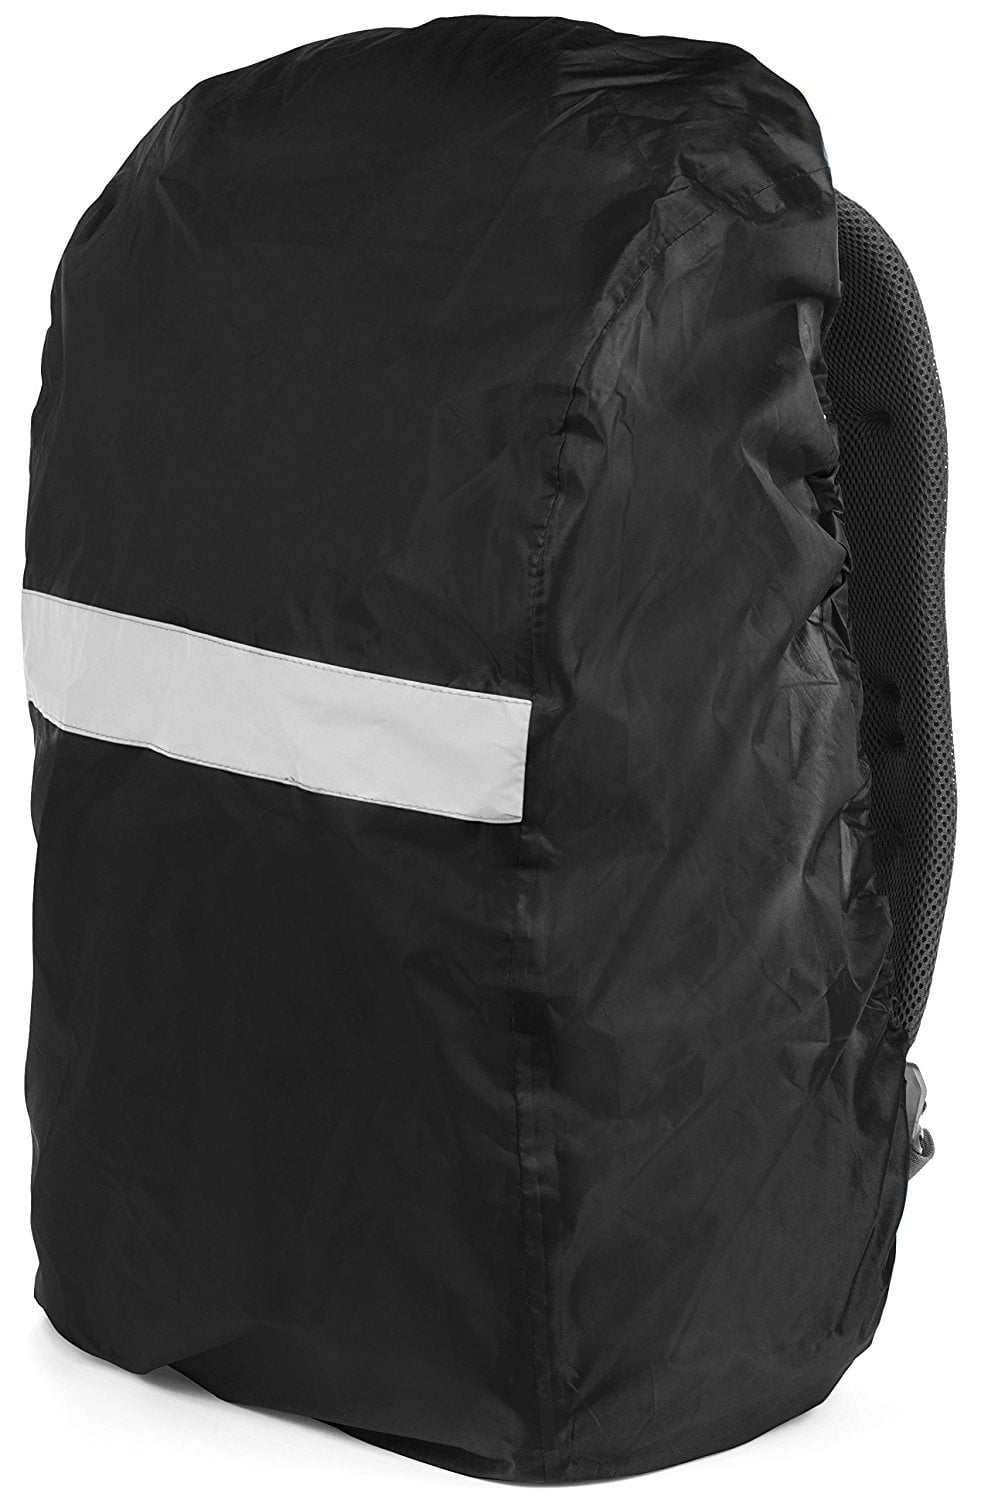 Onsinic Backpack Rain Cover Nylon Waterproof Reflective Rain Protection Rucksack for Hiking Camping Traveling Cycling Rucksack Rainproof Cover,Black